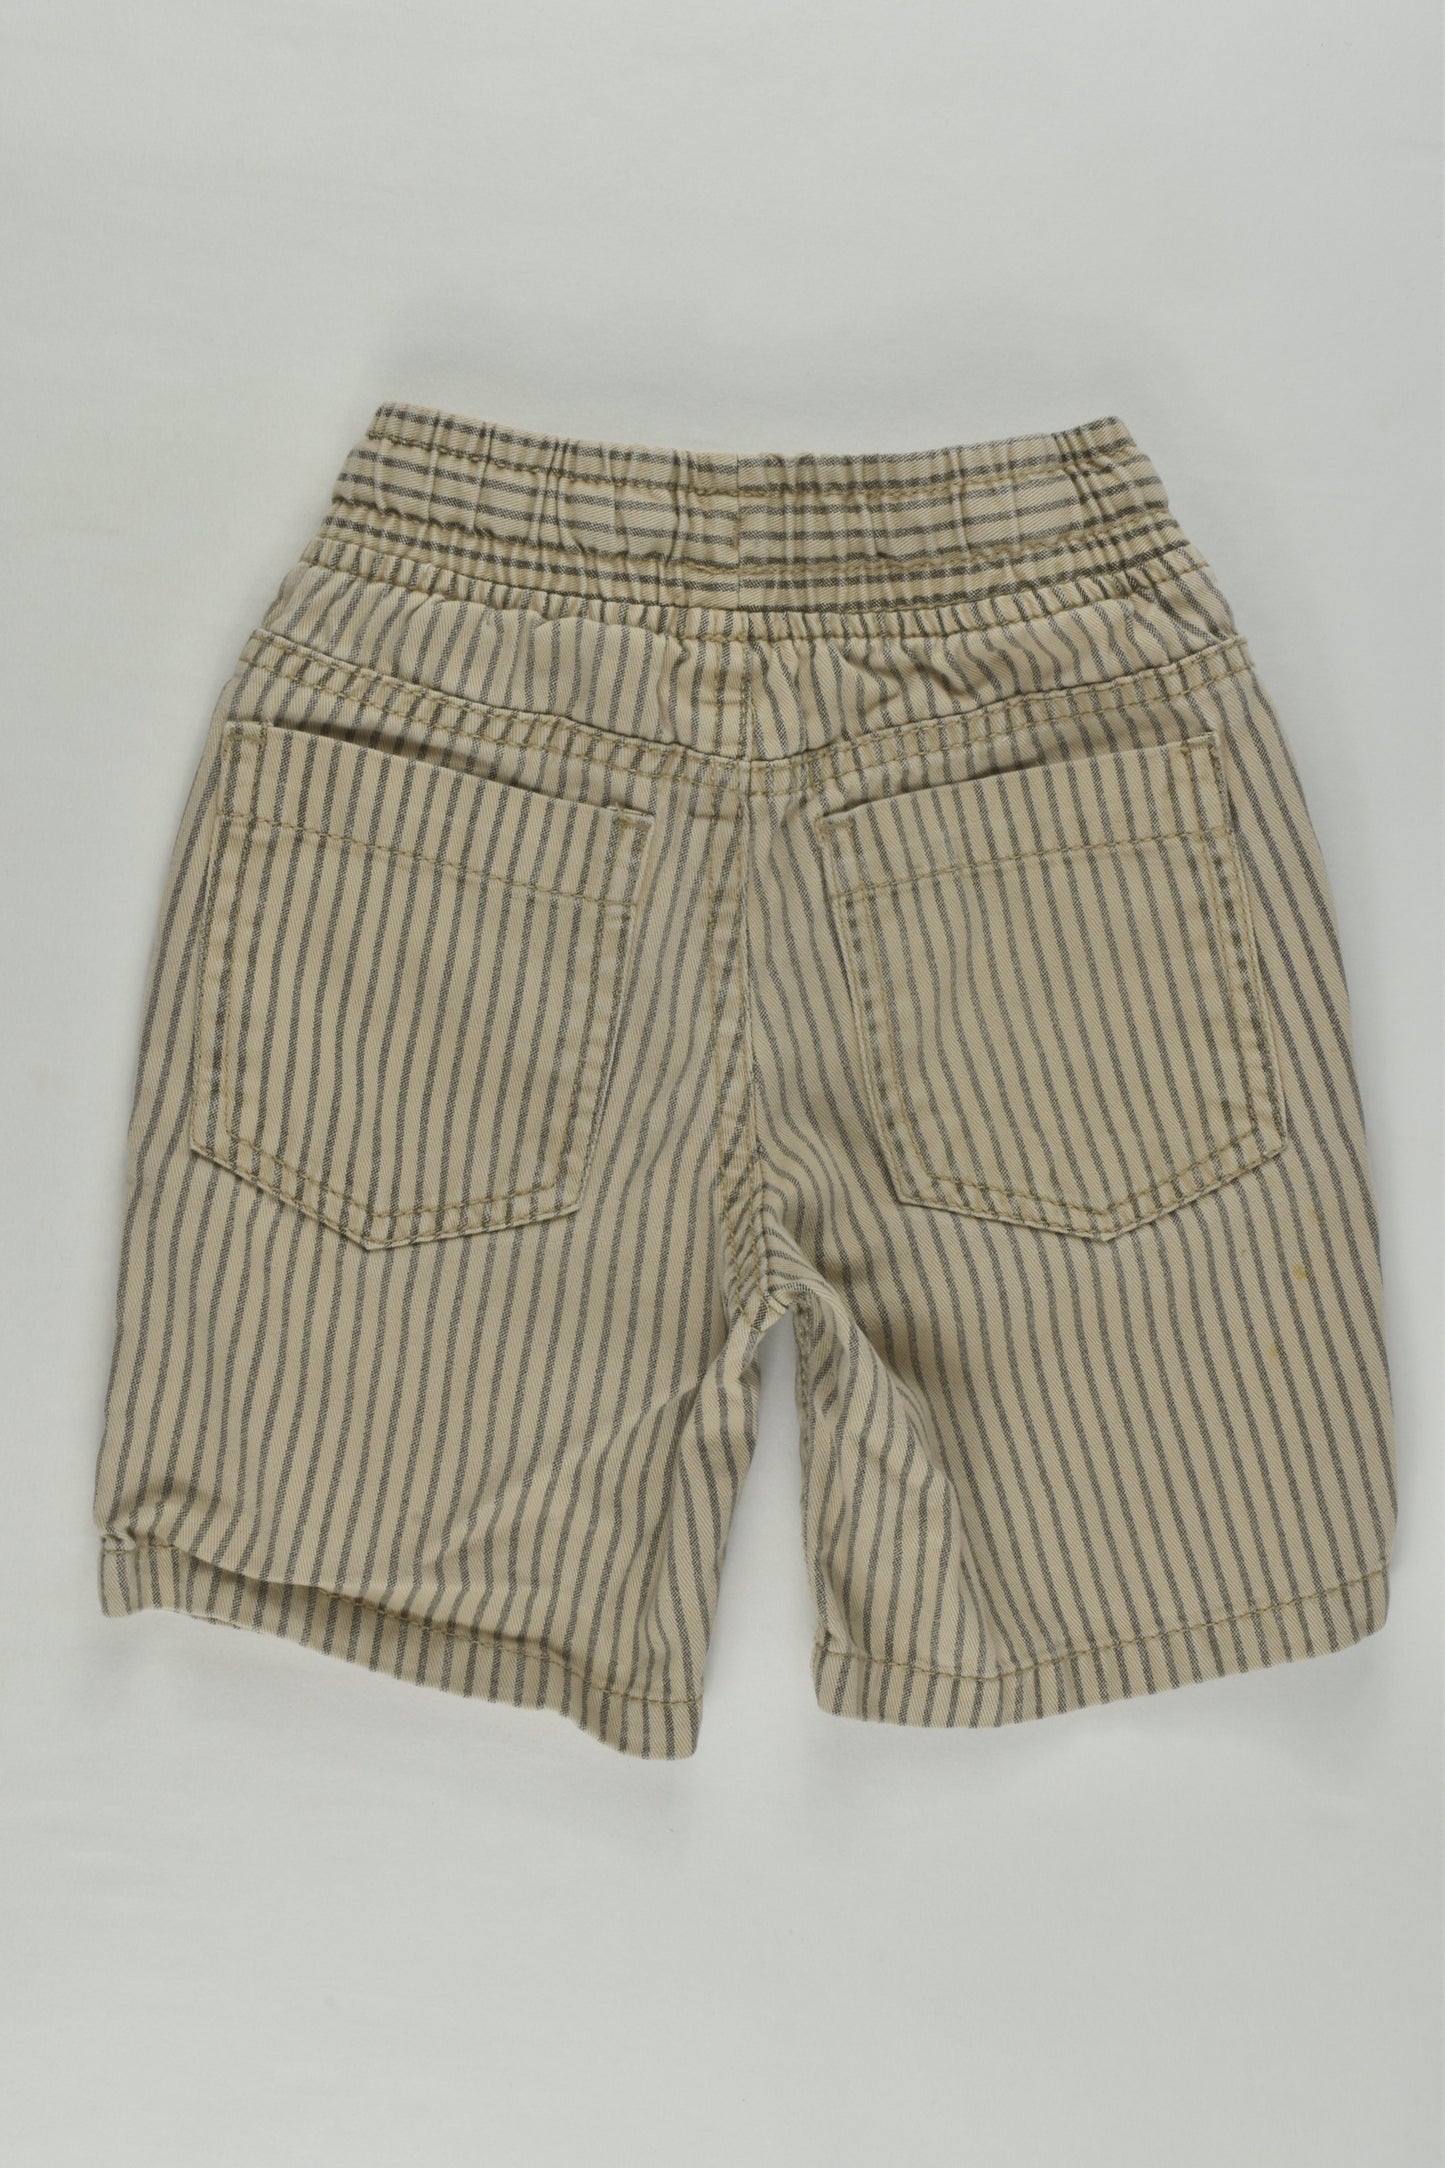 Pumpkin Patch Size 1 (12-18 months) Striped Shorts